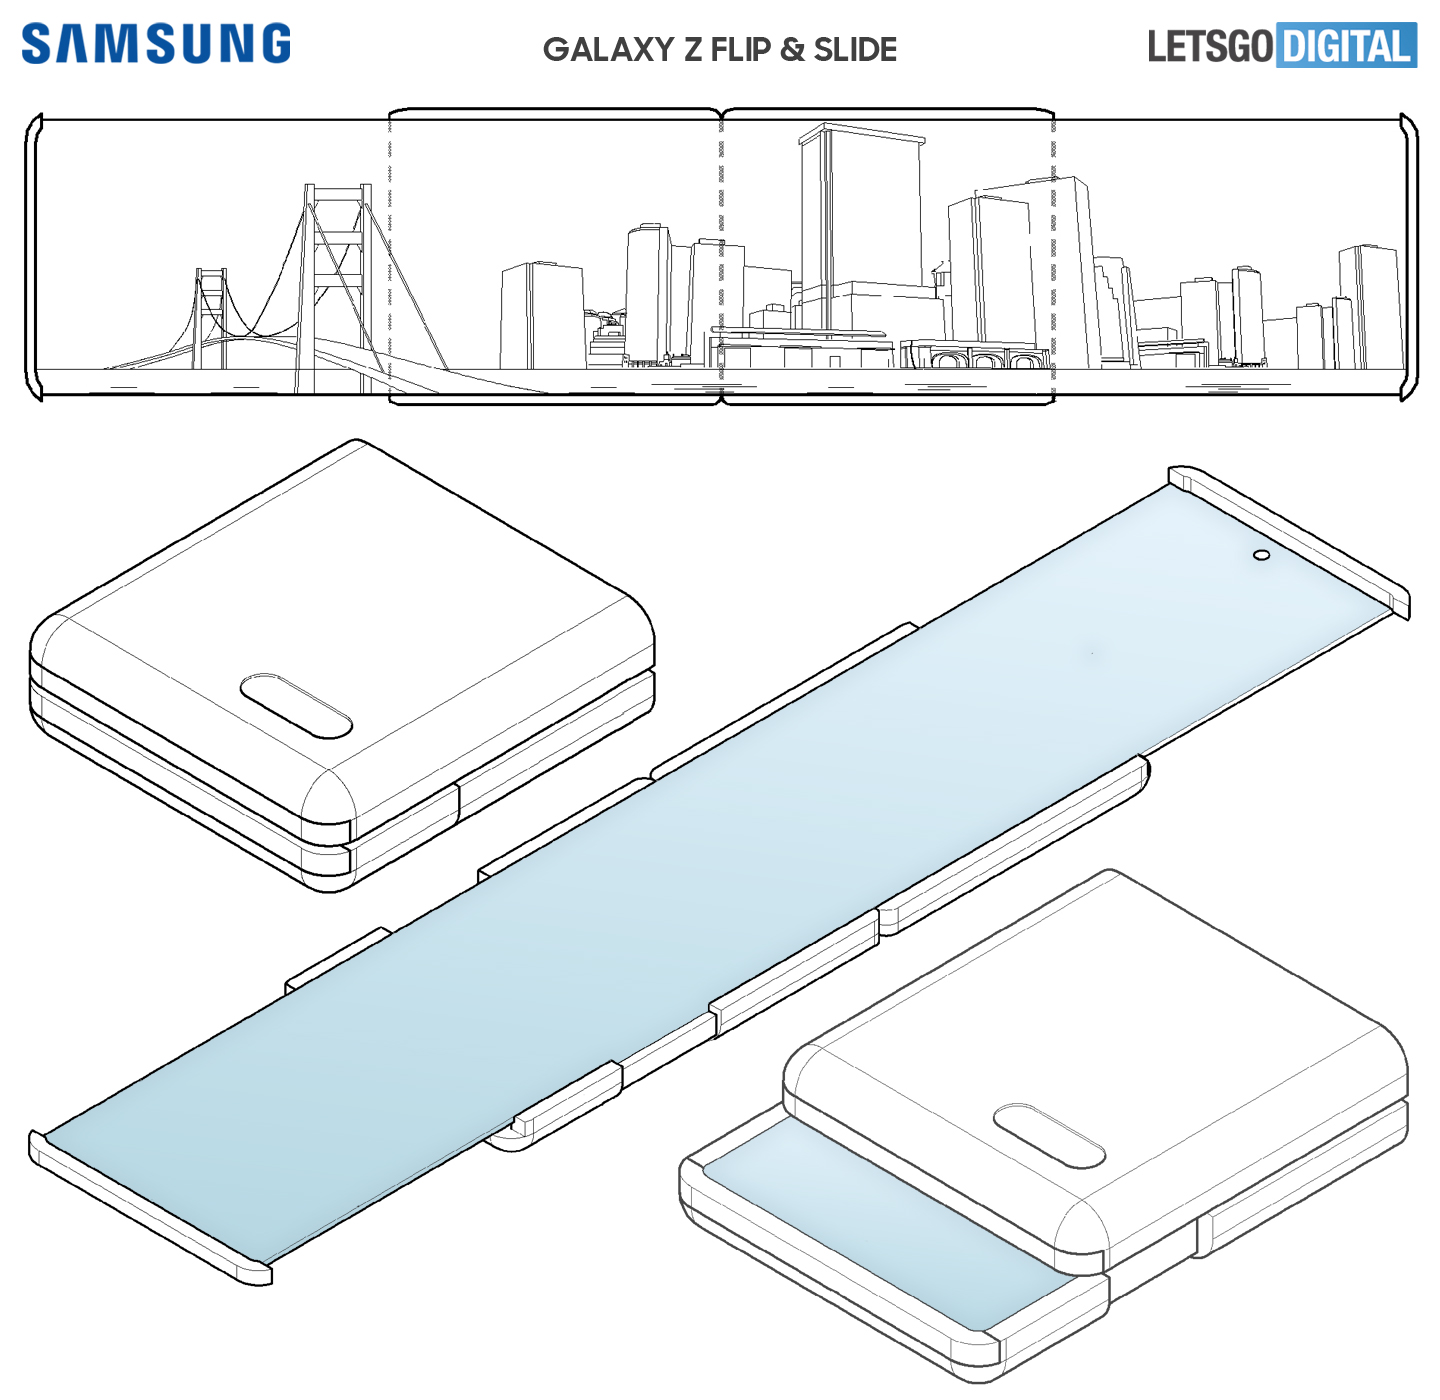 Samsung Galaxy Z Flip Slide